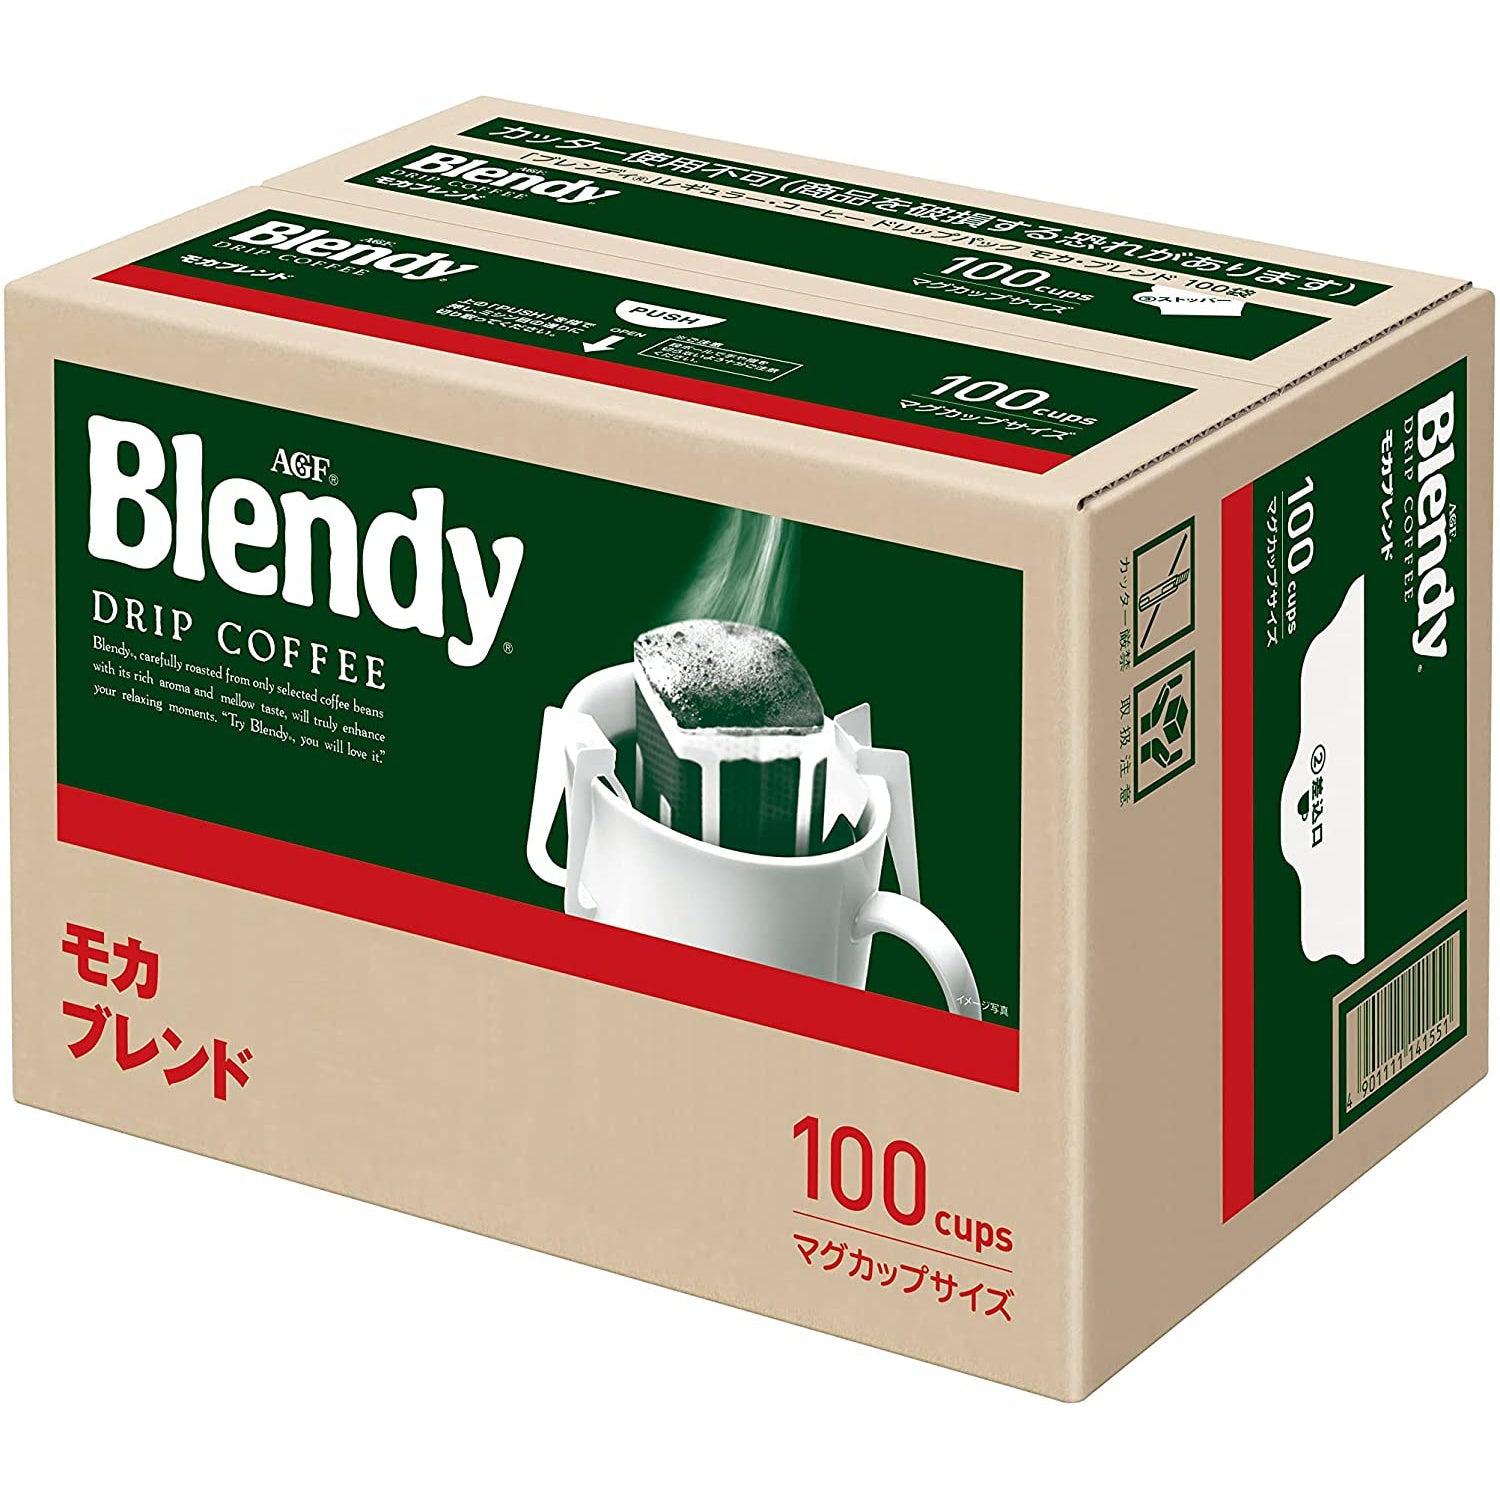 AGF Blendy Drip Coffee Mocha Blend 100 Bags-Japanese Taste